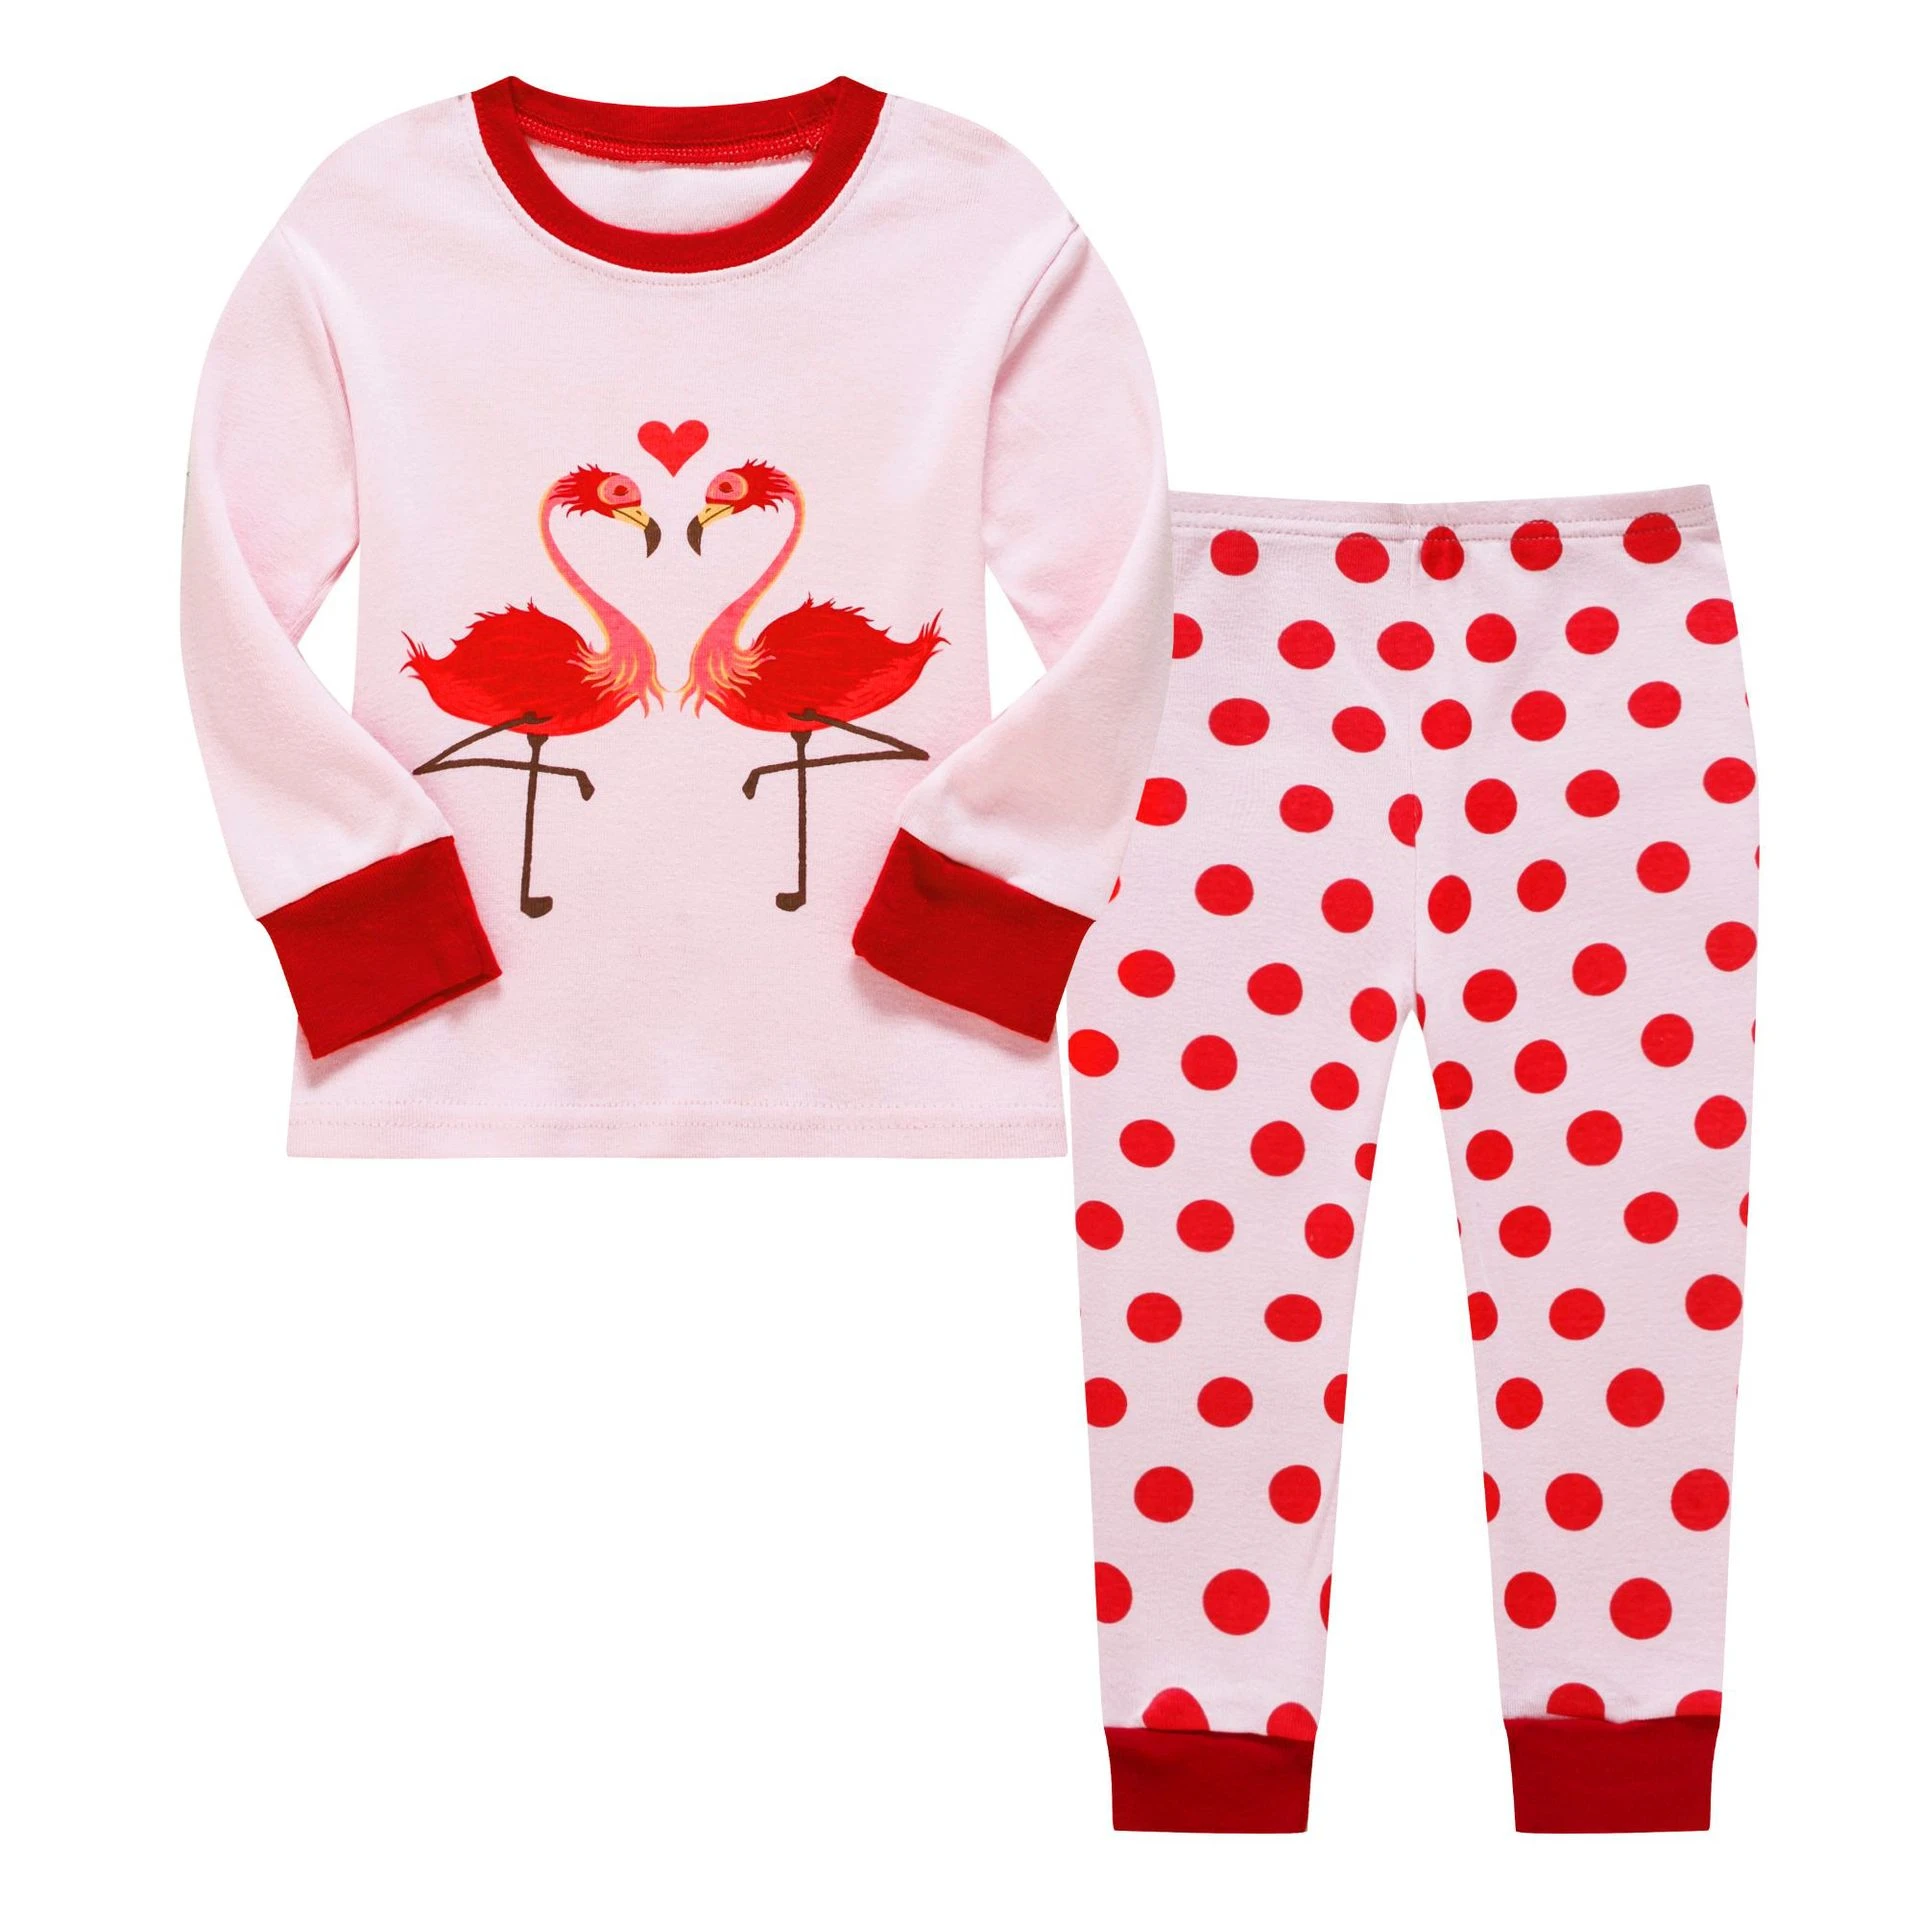 2 pcs Kids Sleepwear Cotton Kids Pajamas Set 100% Cotton Kids Night Wear